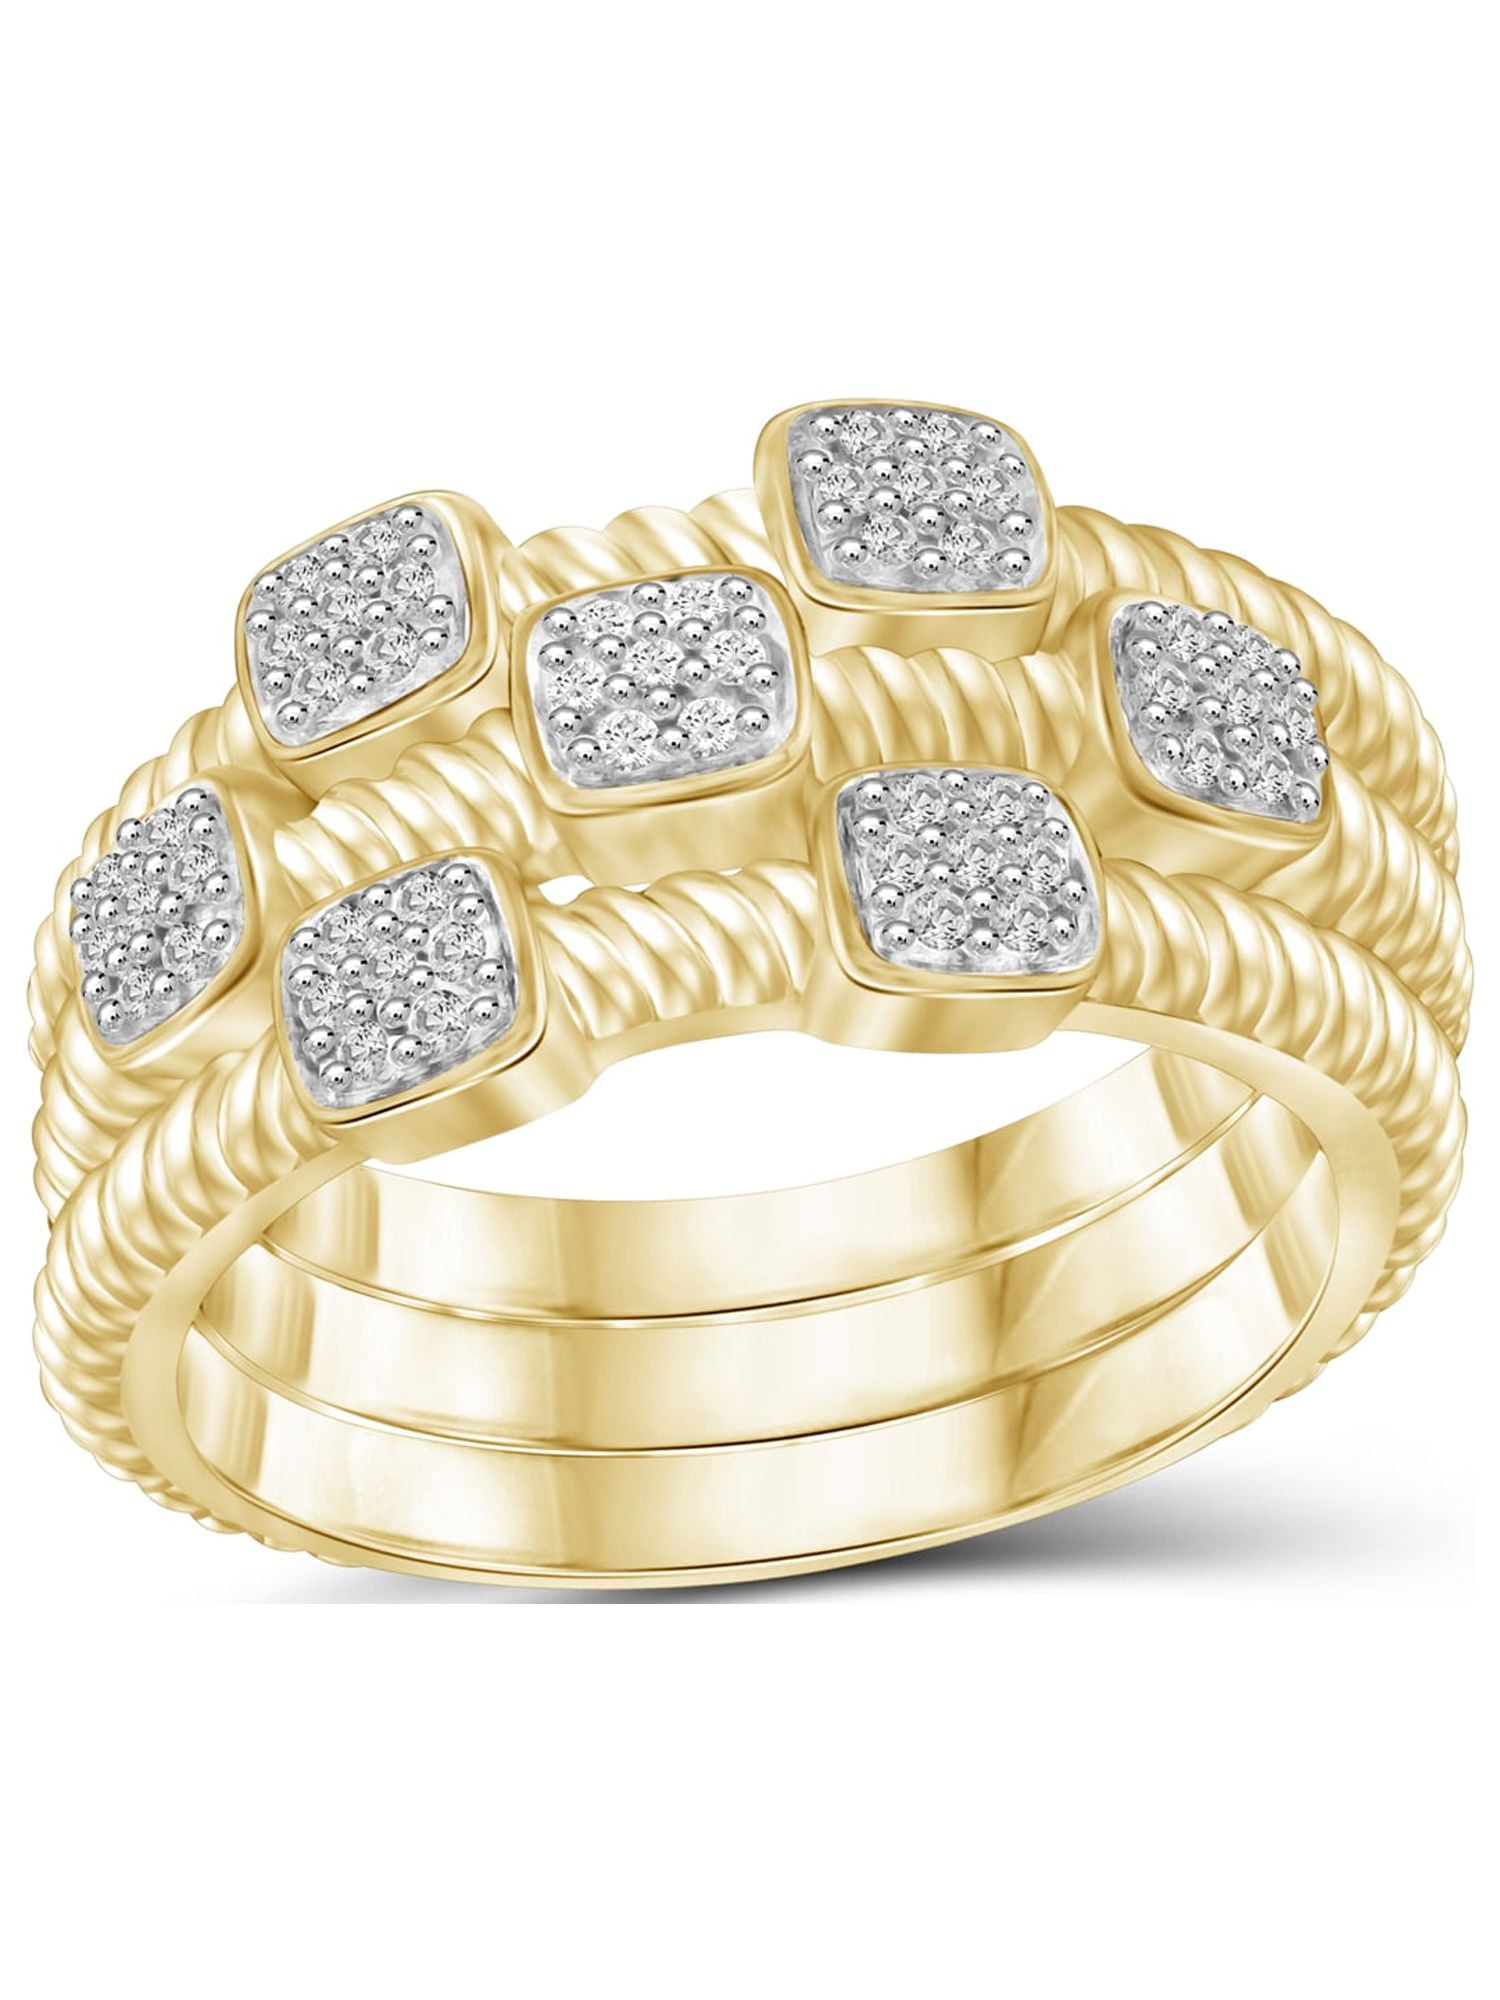 Cuoff Jewelry Rose Gold Filigree Leaf Diamond Enement Wedding Band Rings  Cheap Jewelry - Walmart.com